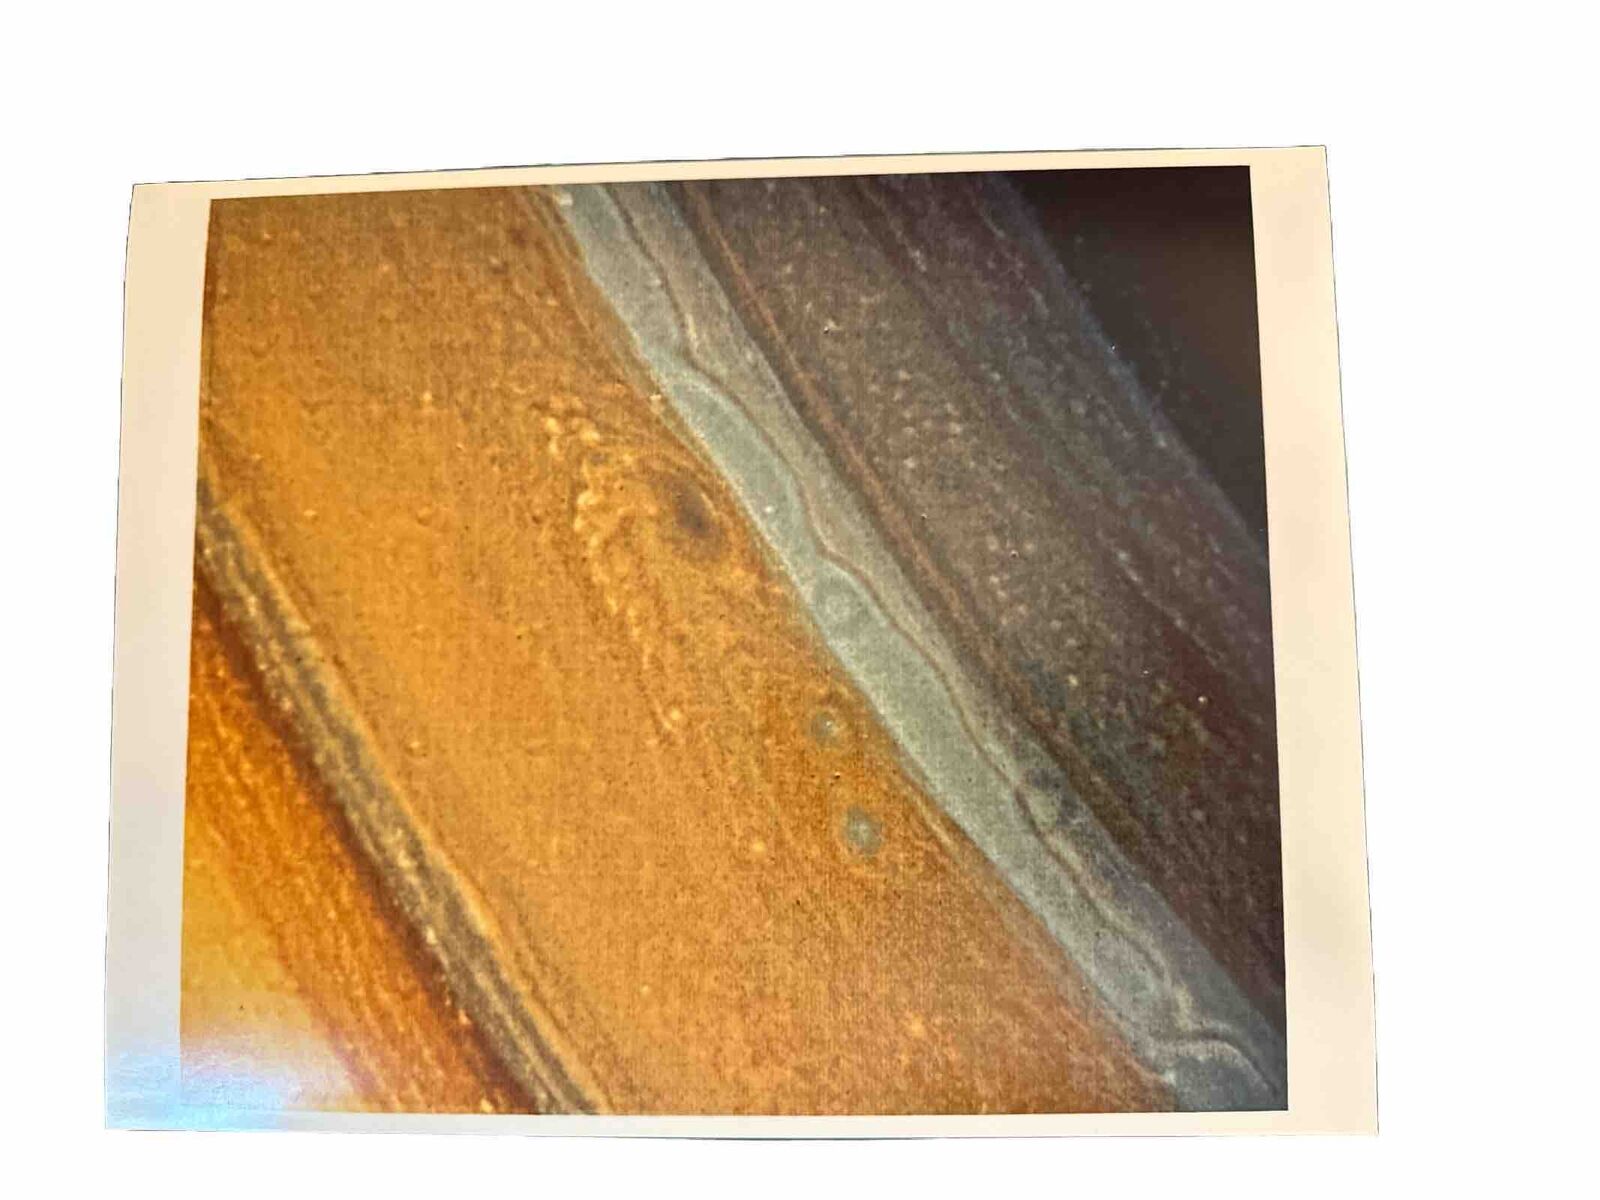 ORIGINAL JPL NASA FALSE COLOR IMAGE OF SURFACE OF SATURN PHOTO BY VOYAGER 2